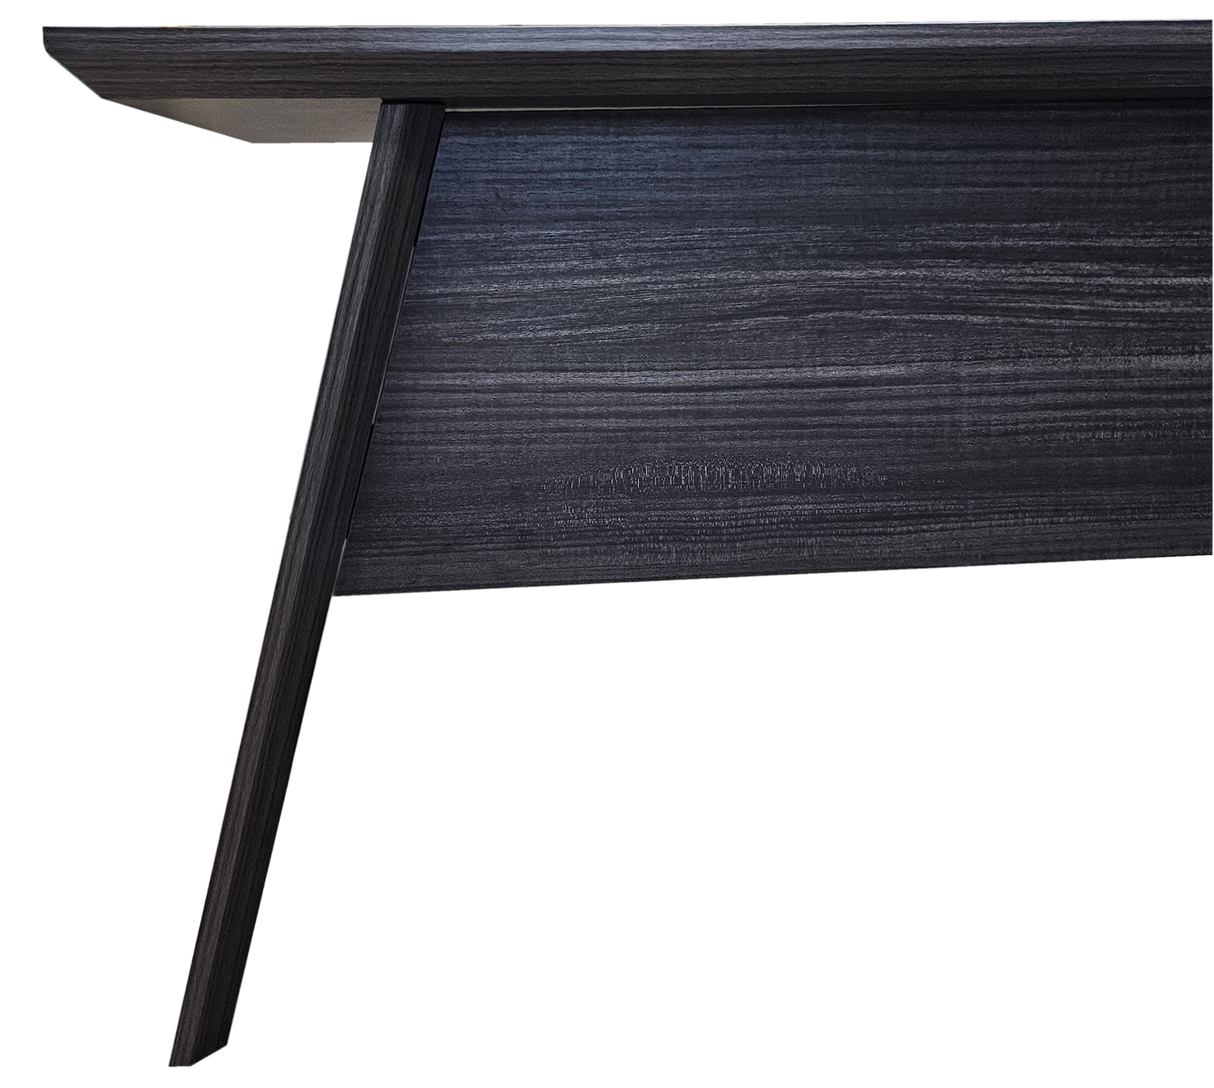 Modern Grey Oak Veneer Executive Office Desk with Built in Pedestal and Inclined Leg - 2000mm - DG19-S-D20